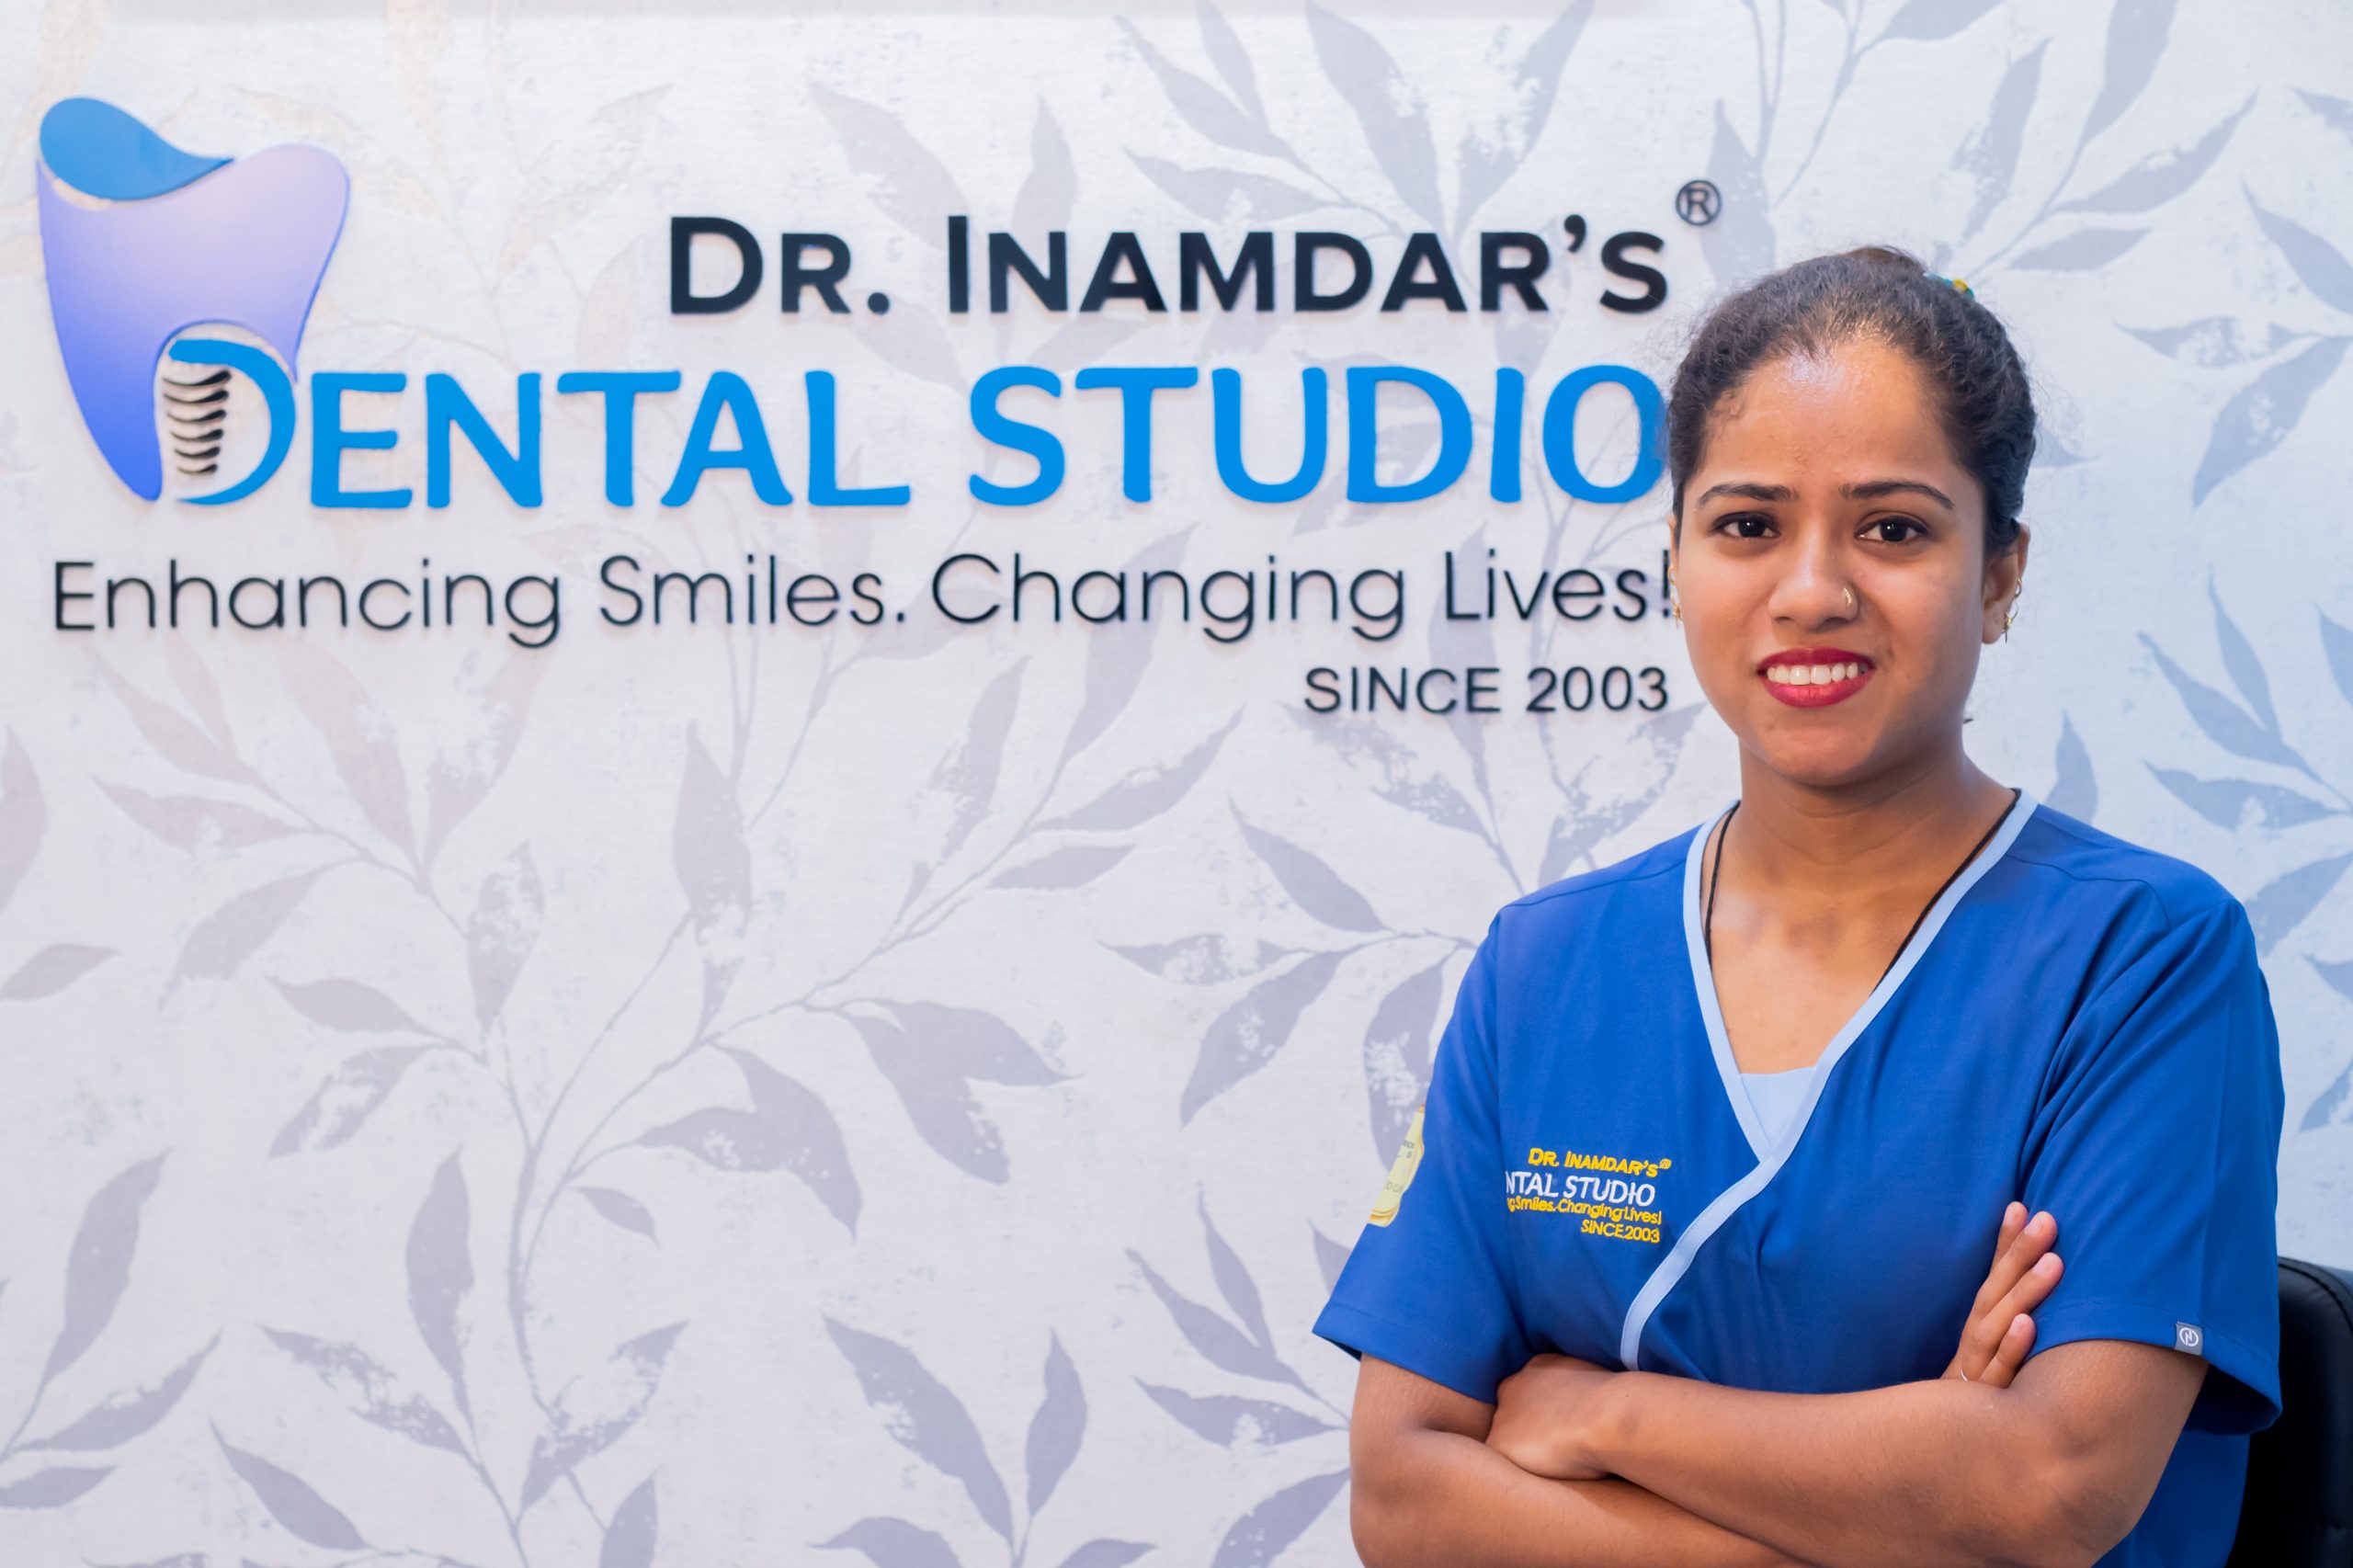 Dental Studio